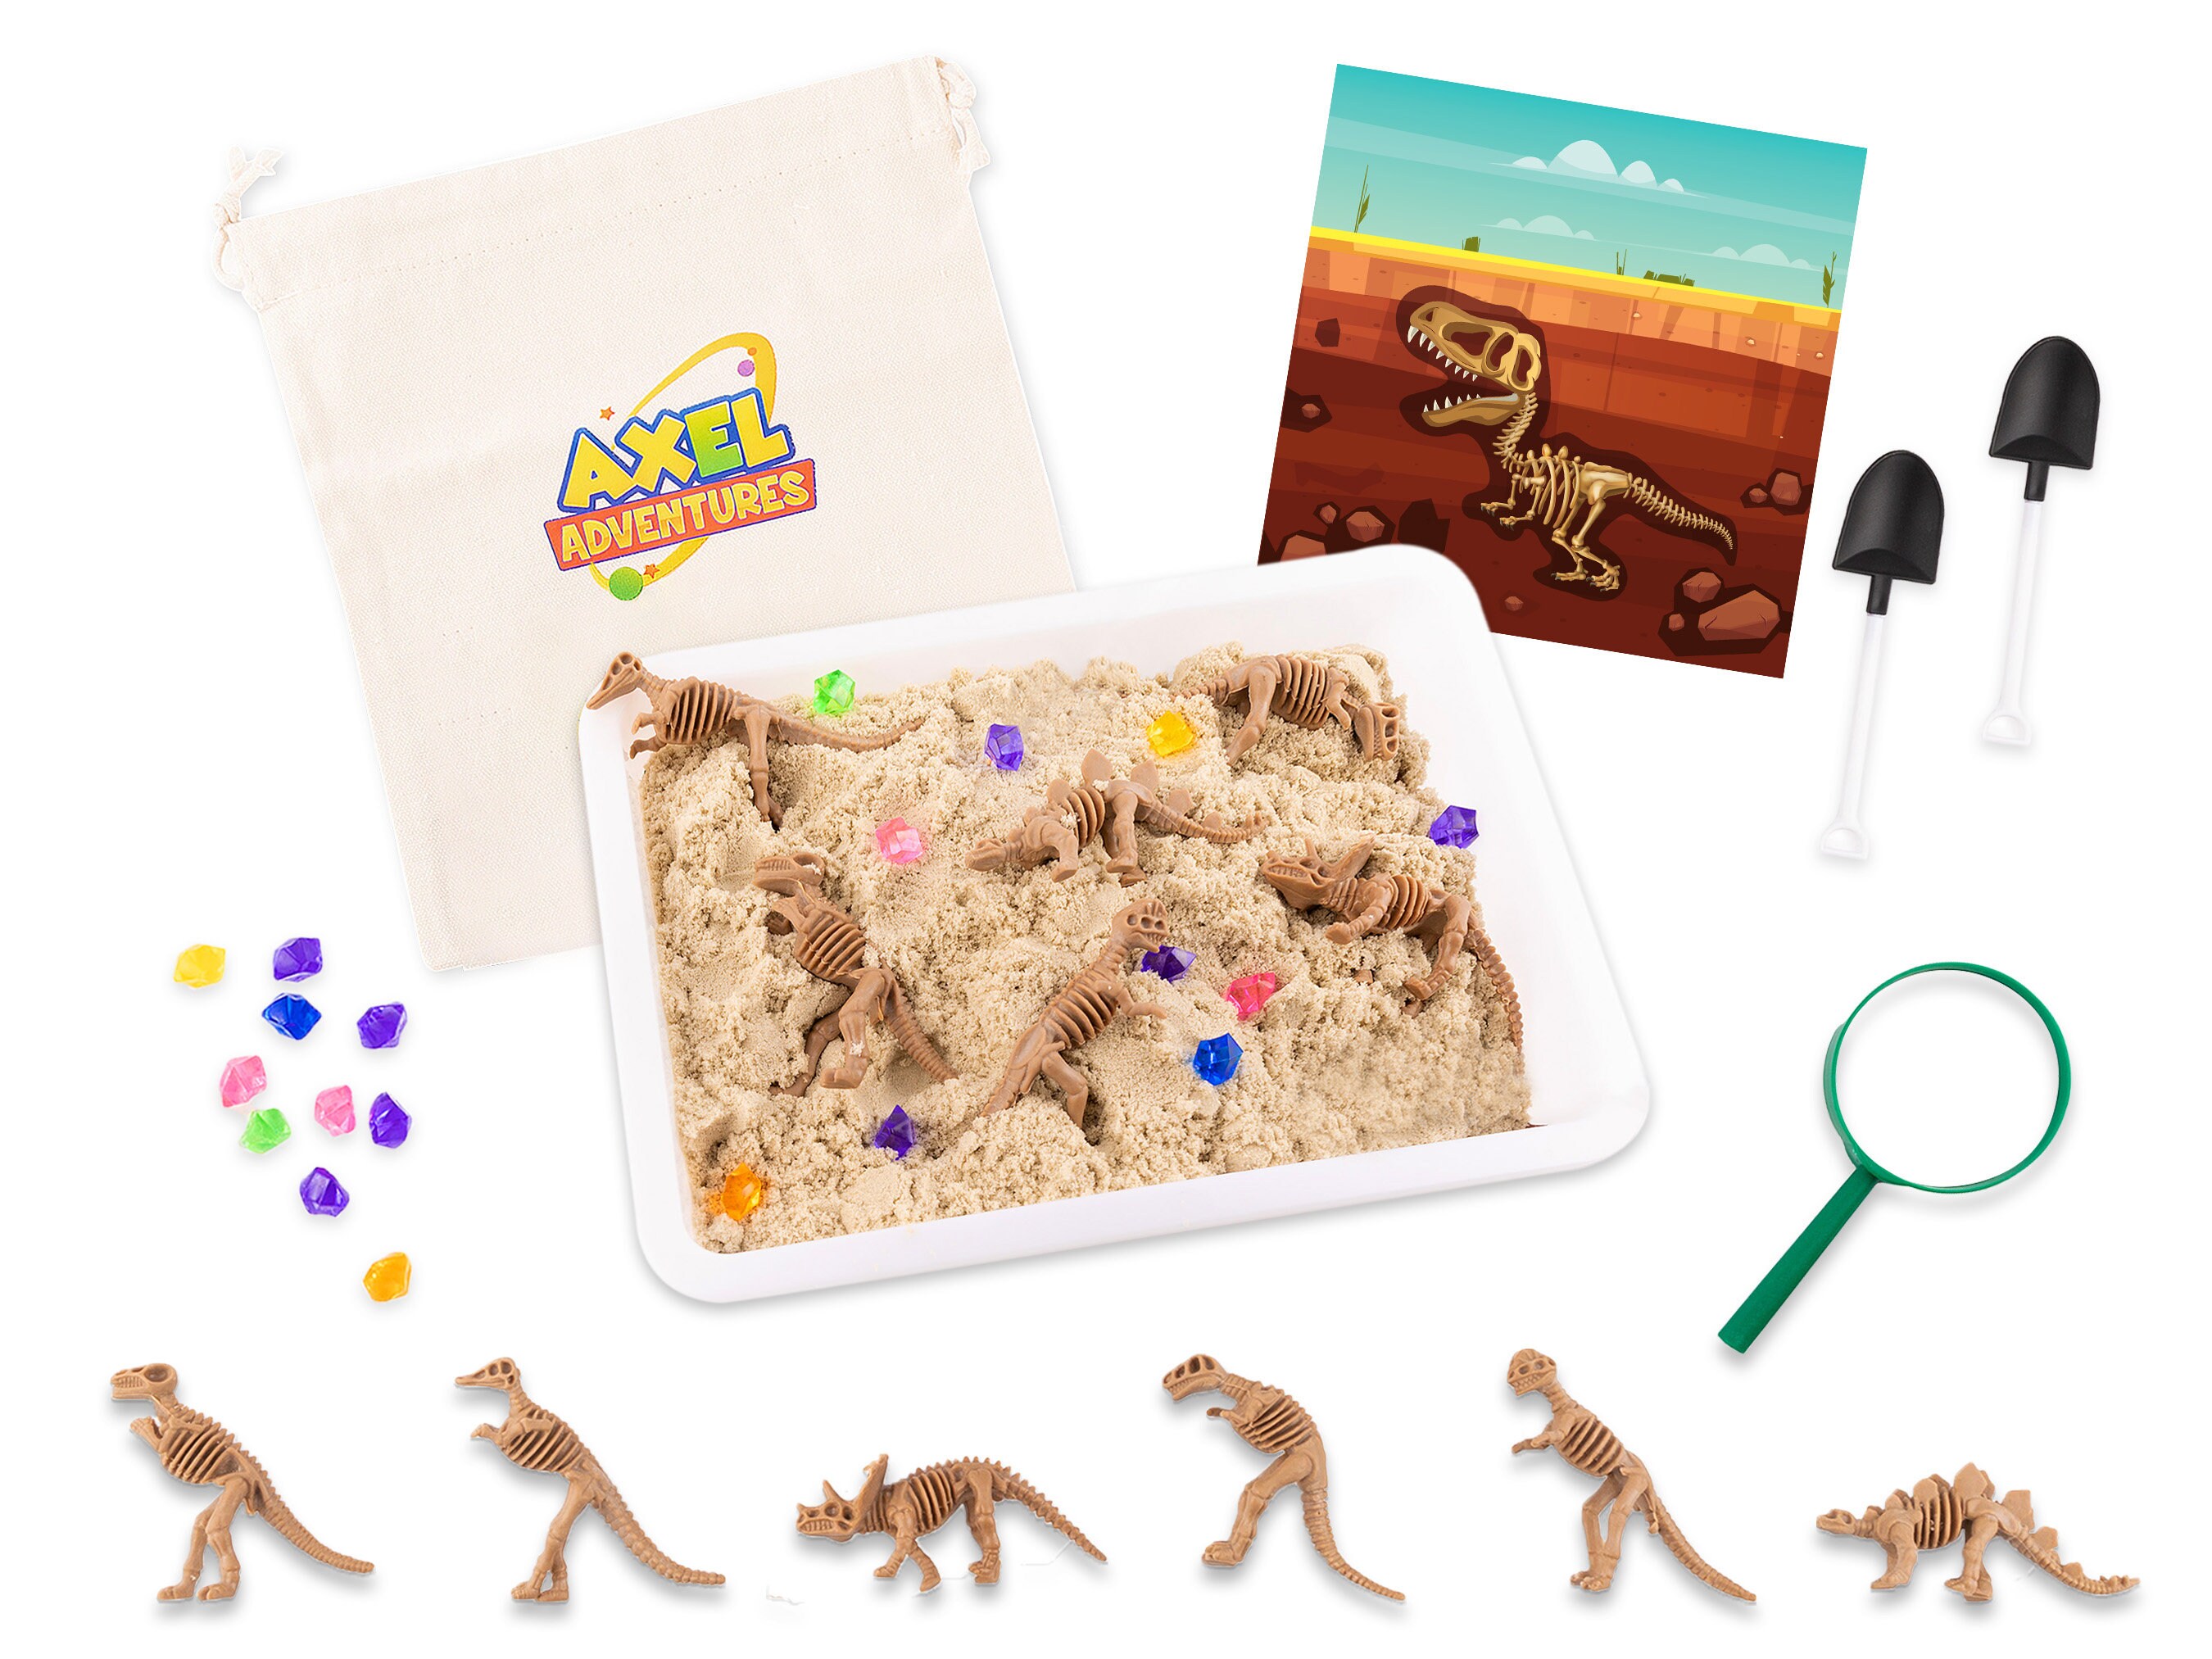 Mini Play Dough, Playdough, Sensory Play, Gift Tins Bulk 